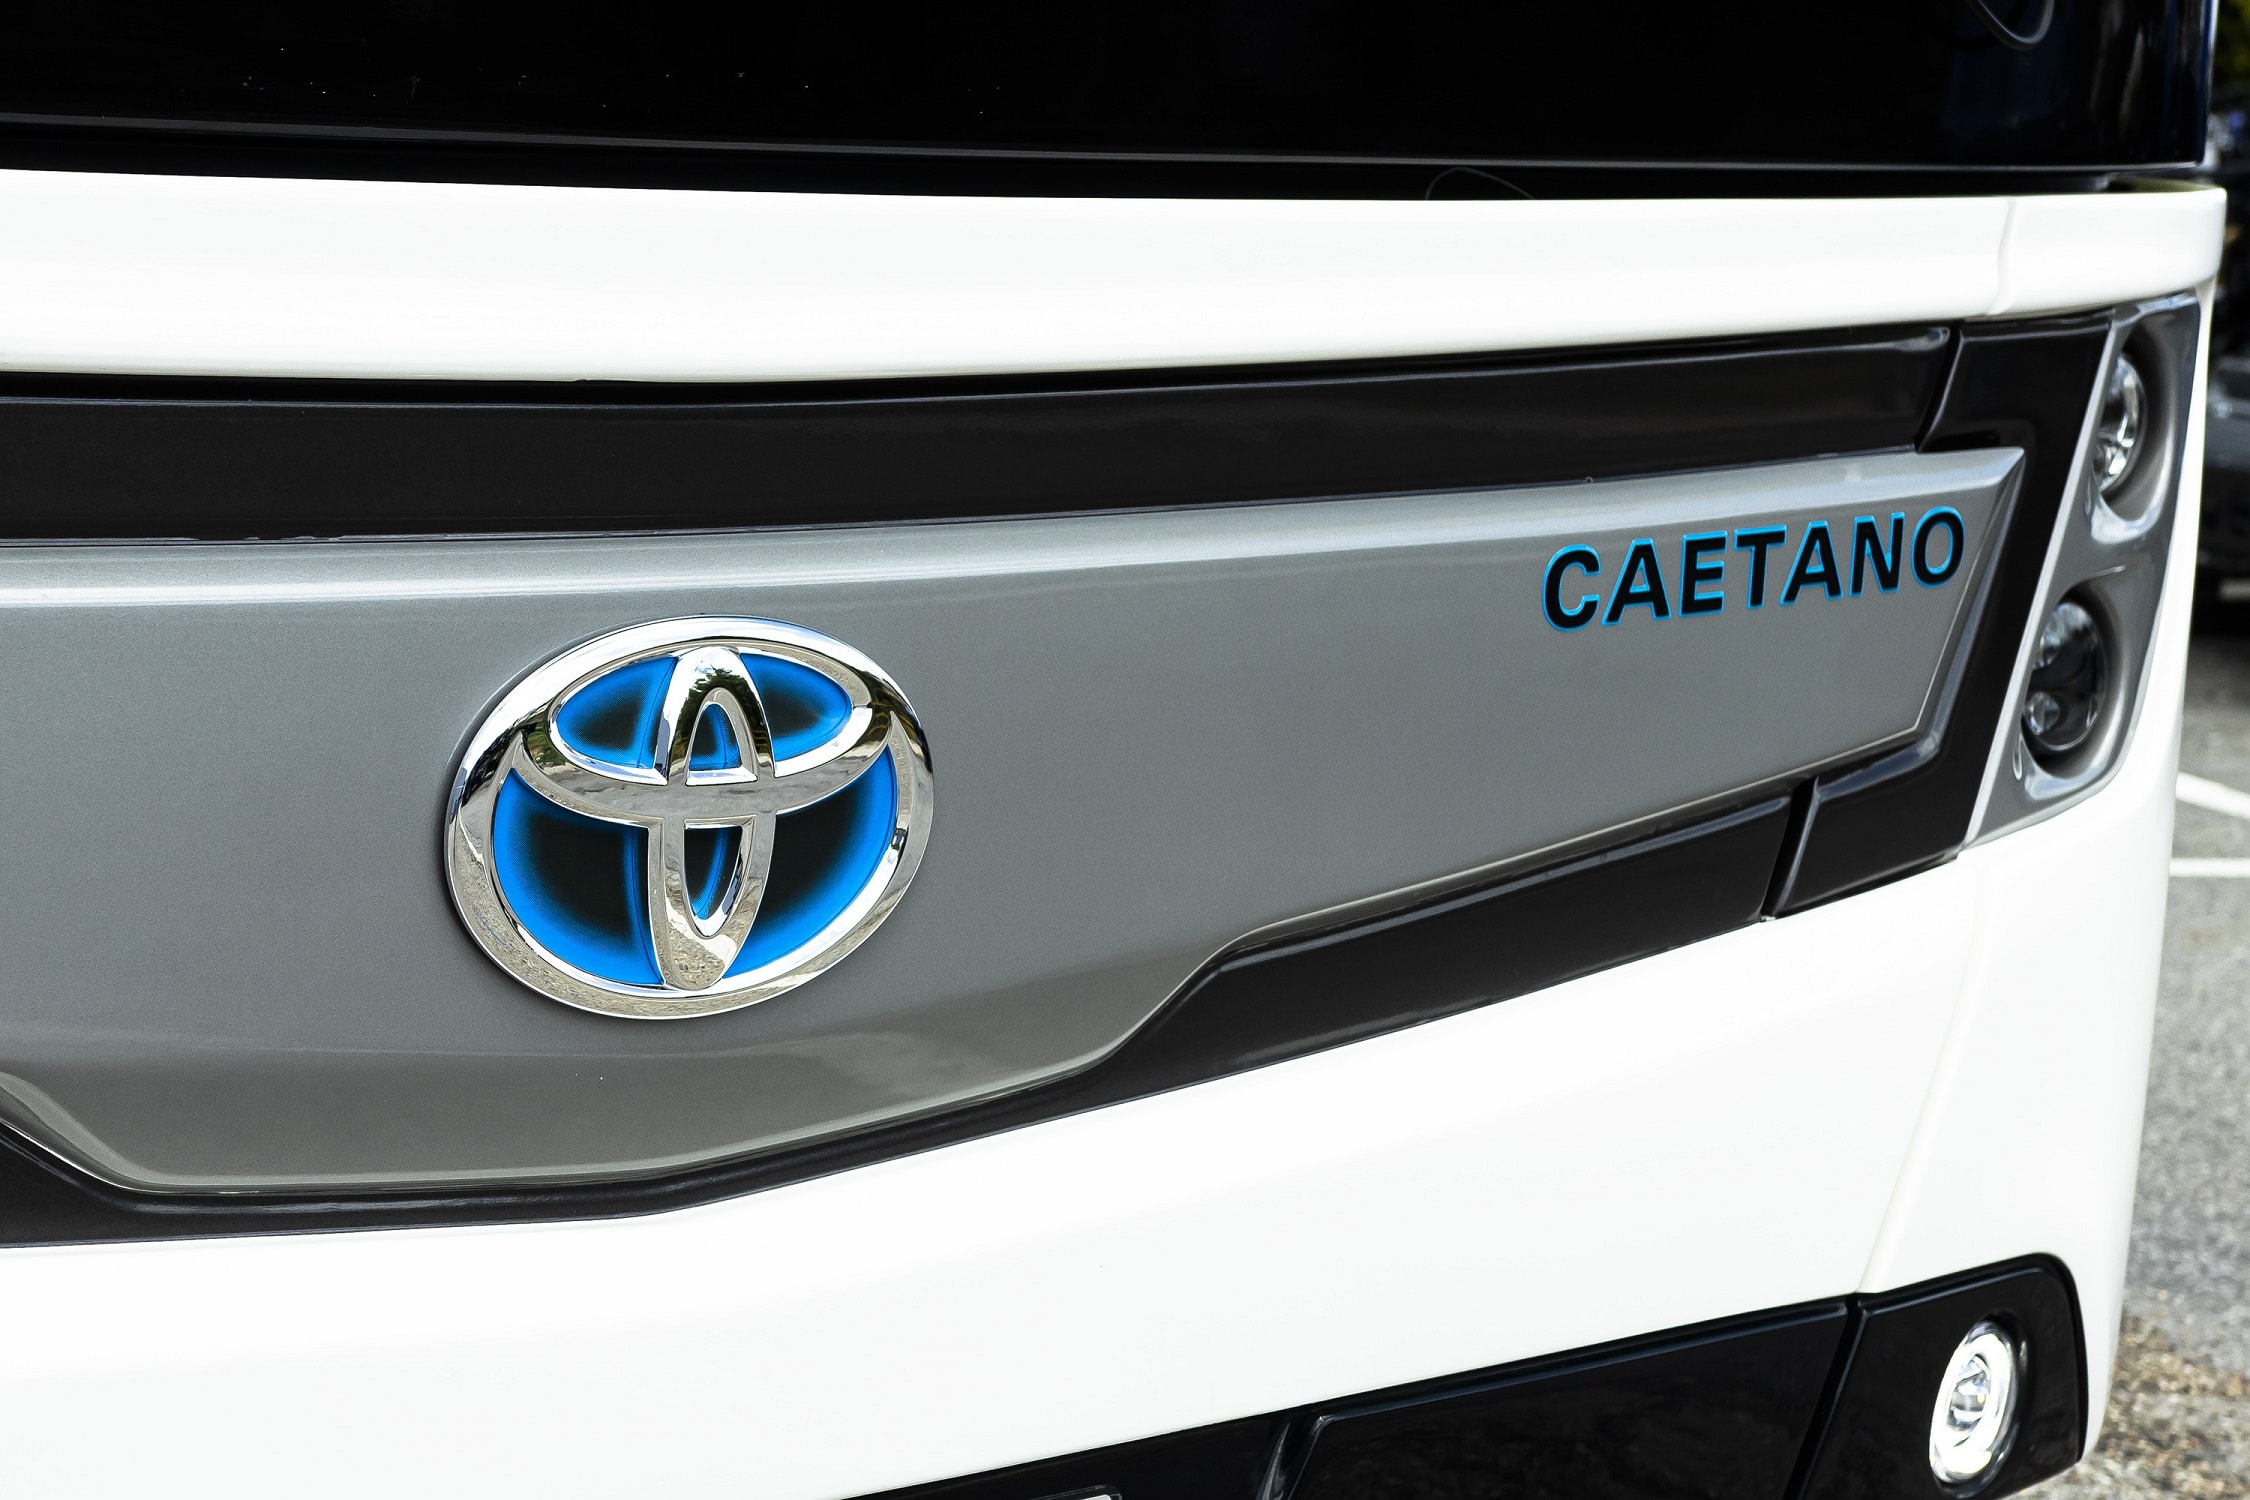 CaetanoBus and Toyota in co branding exercise